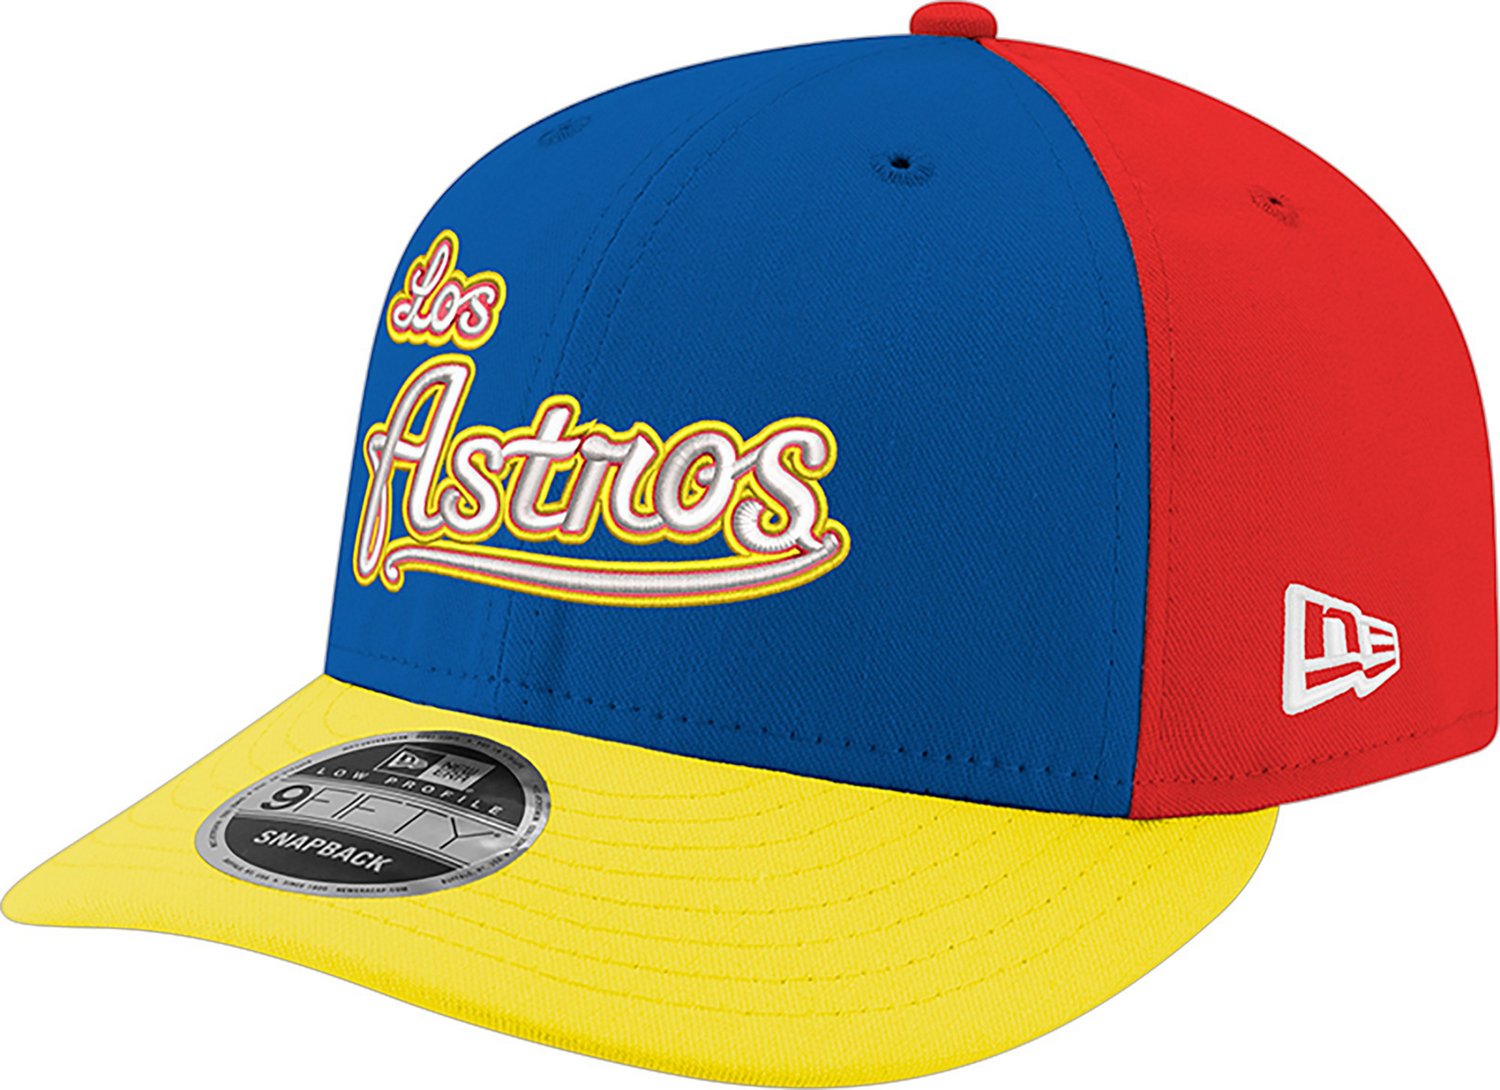 New Era, Accessories, New Era Boston Red Sox Hat Columbia Blue And Yellow